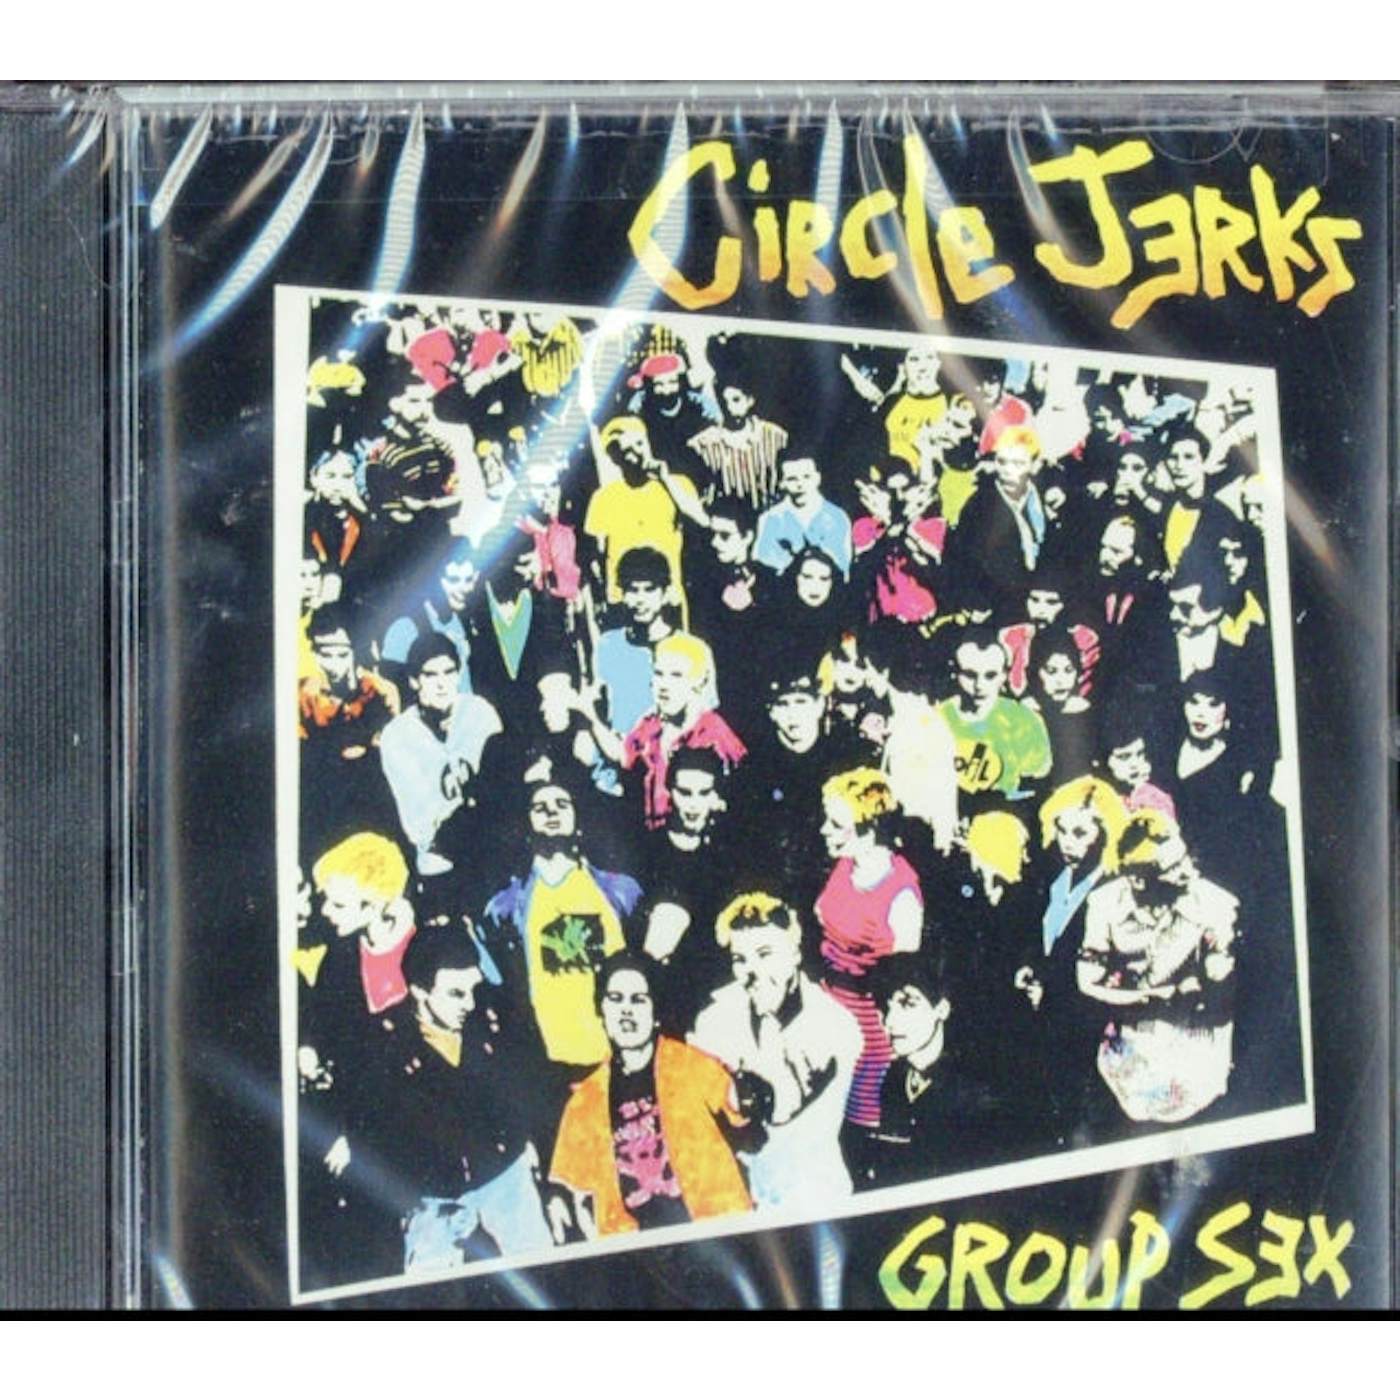 Circle Jerks CD - Group Sex